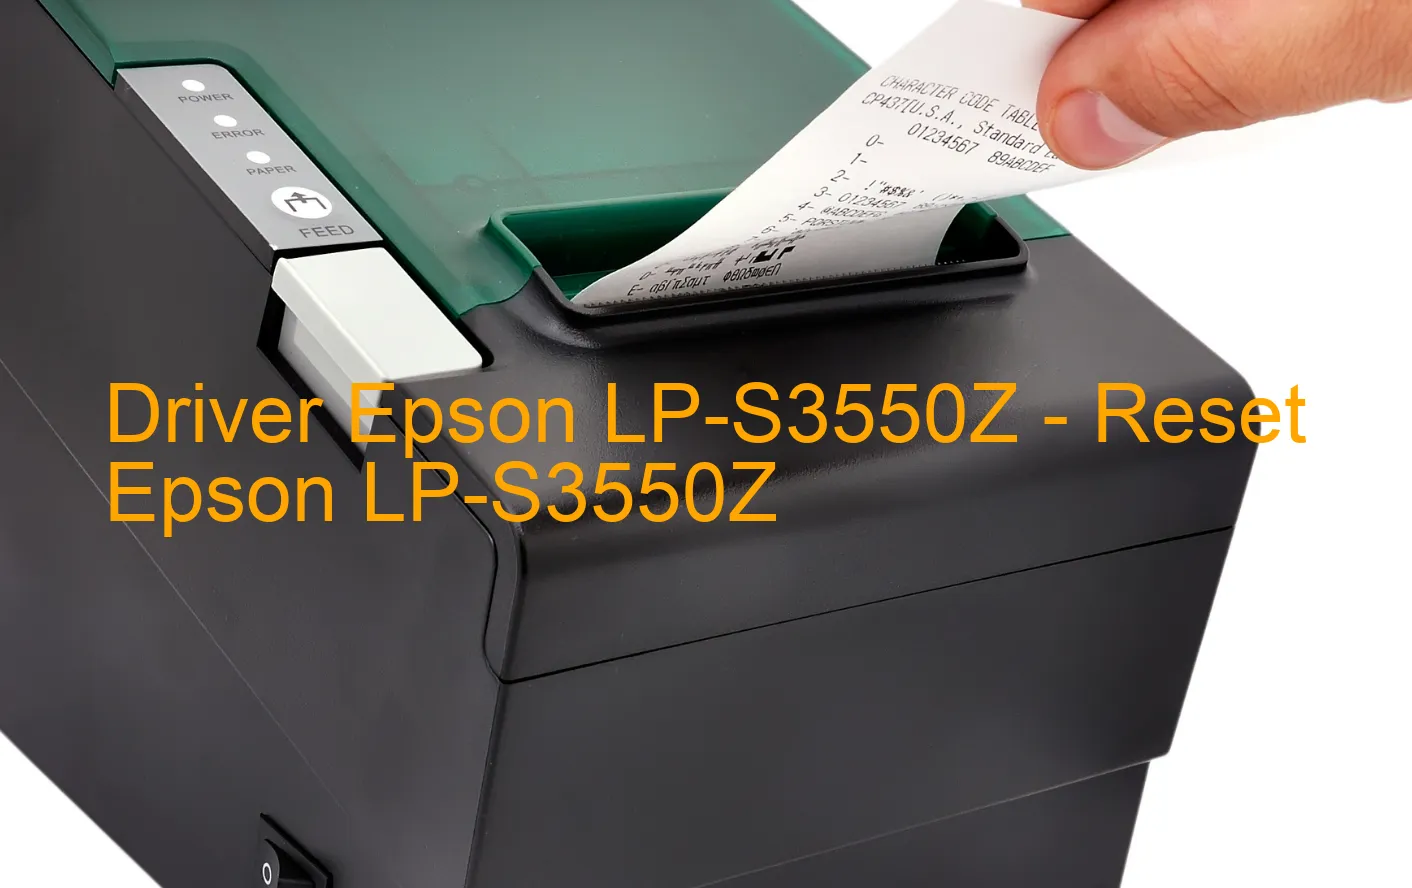 Epson LP-S3550Zのドライバー、Epson LP-S3550Zのリセットソフトウェア